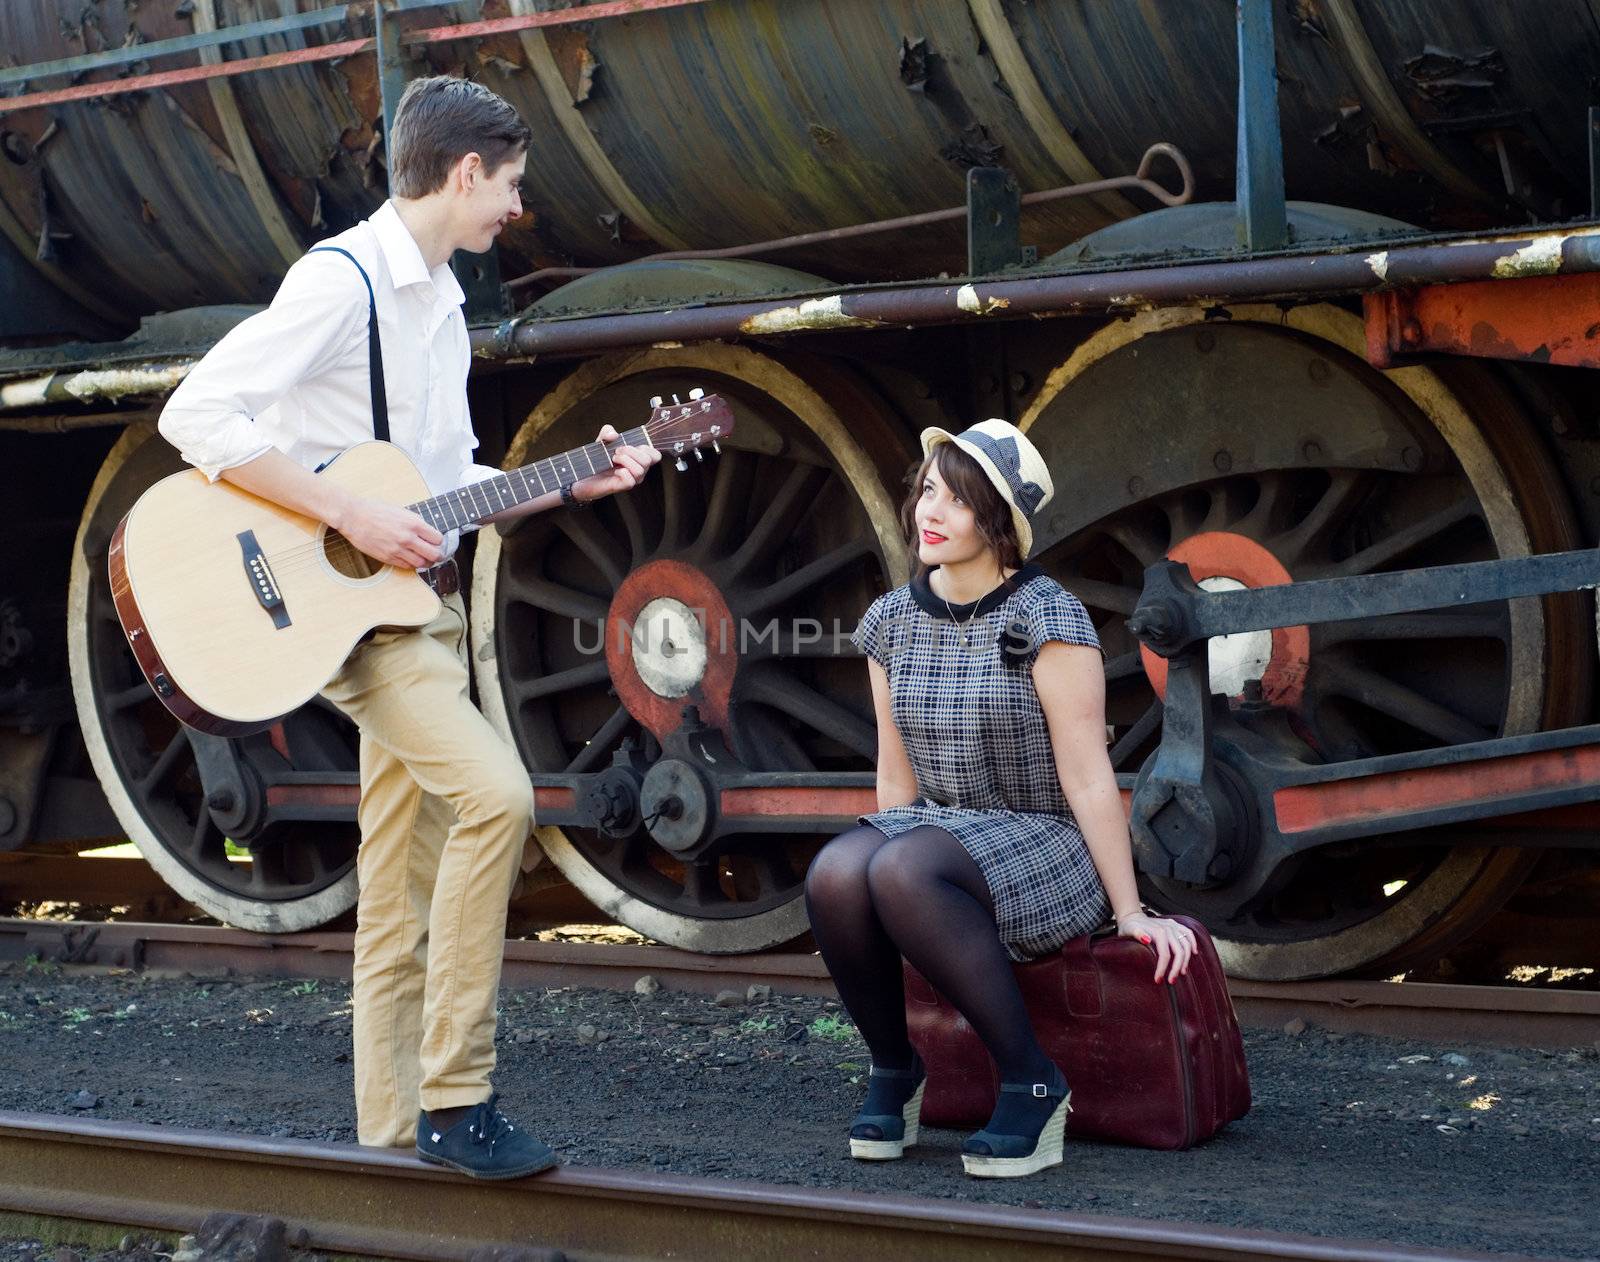 Retro hip hipster romantic love couple serenade  vintage train setting